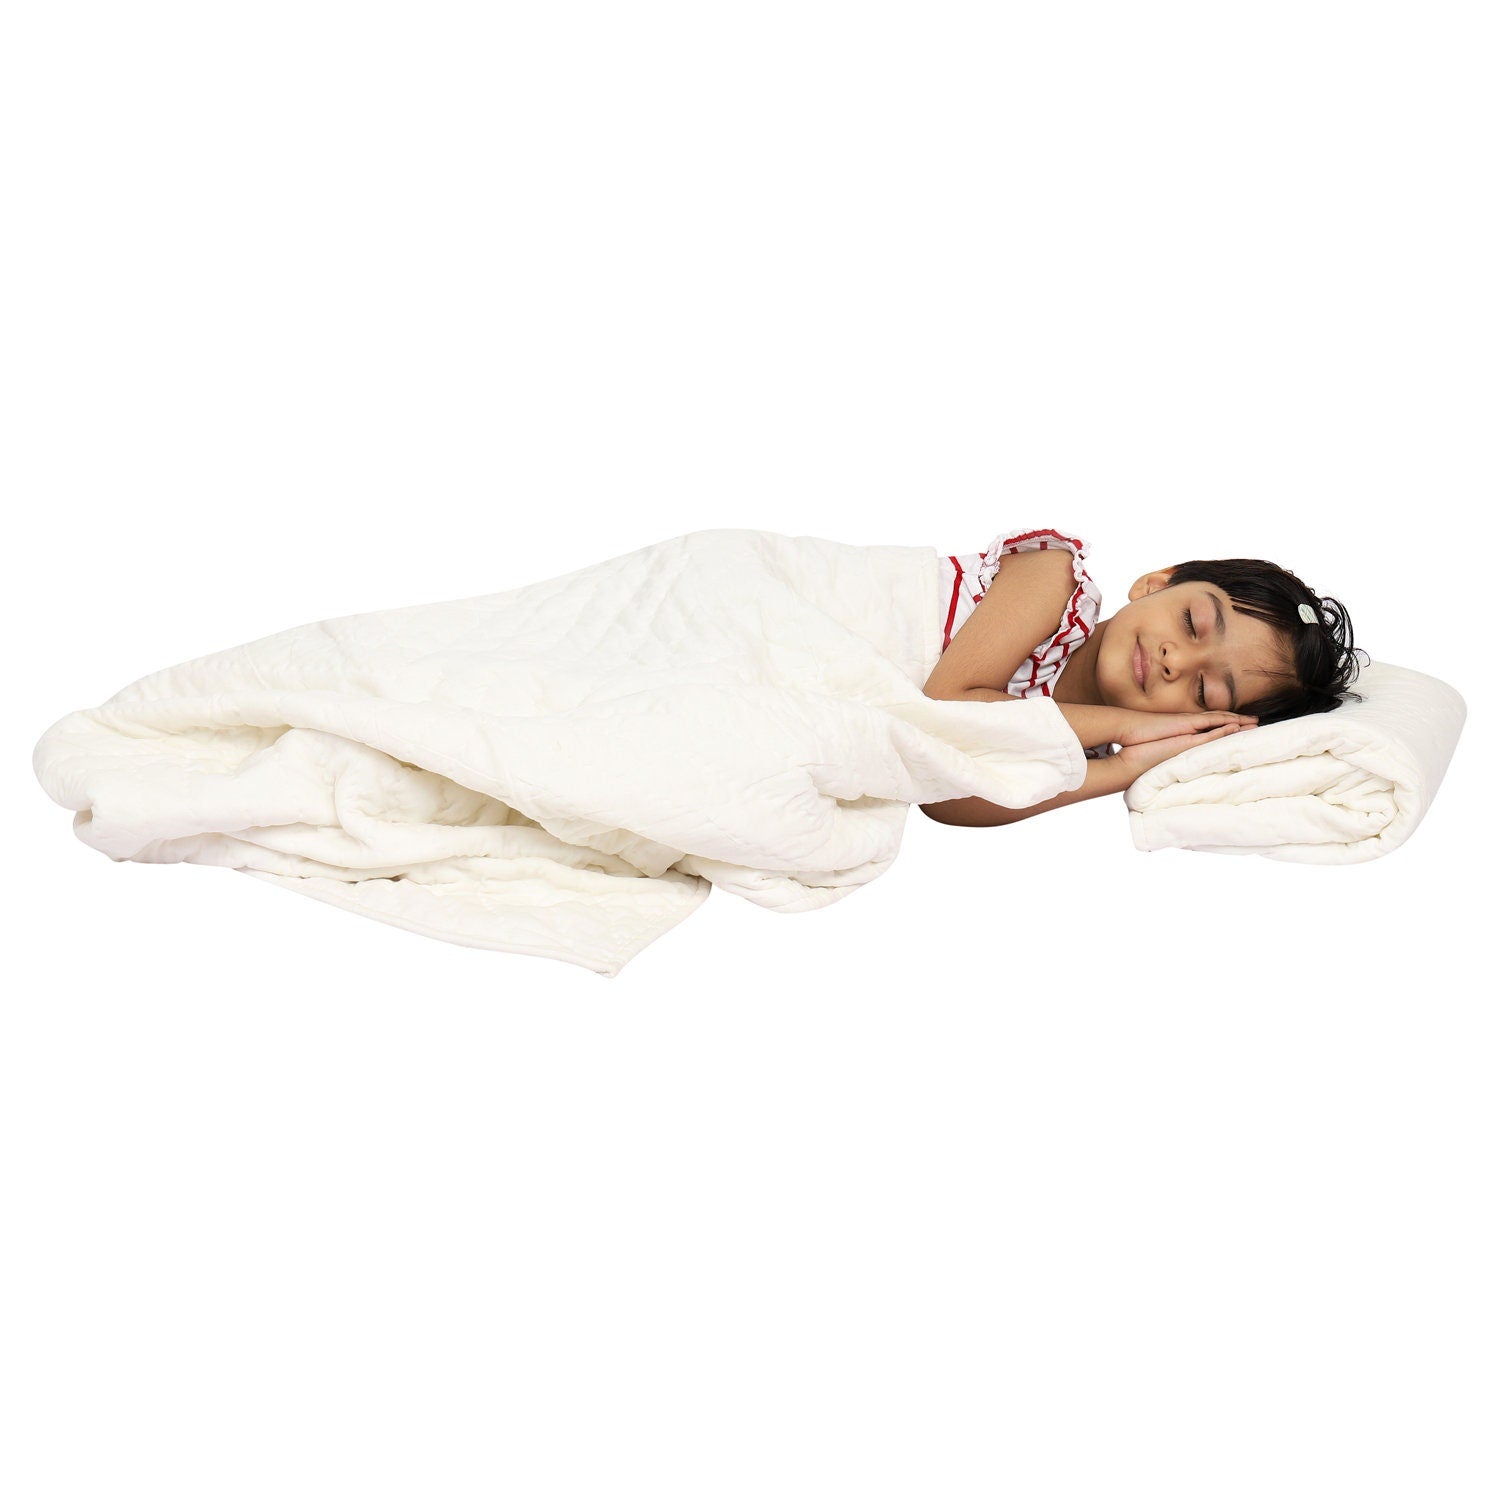 Baby Quilt/Blanket - Organic Cotton - Baby, Infants, Toddlers, Preschoolers, Children - Soft Warm Handmade - Ivory White